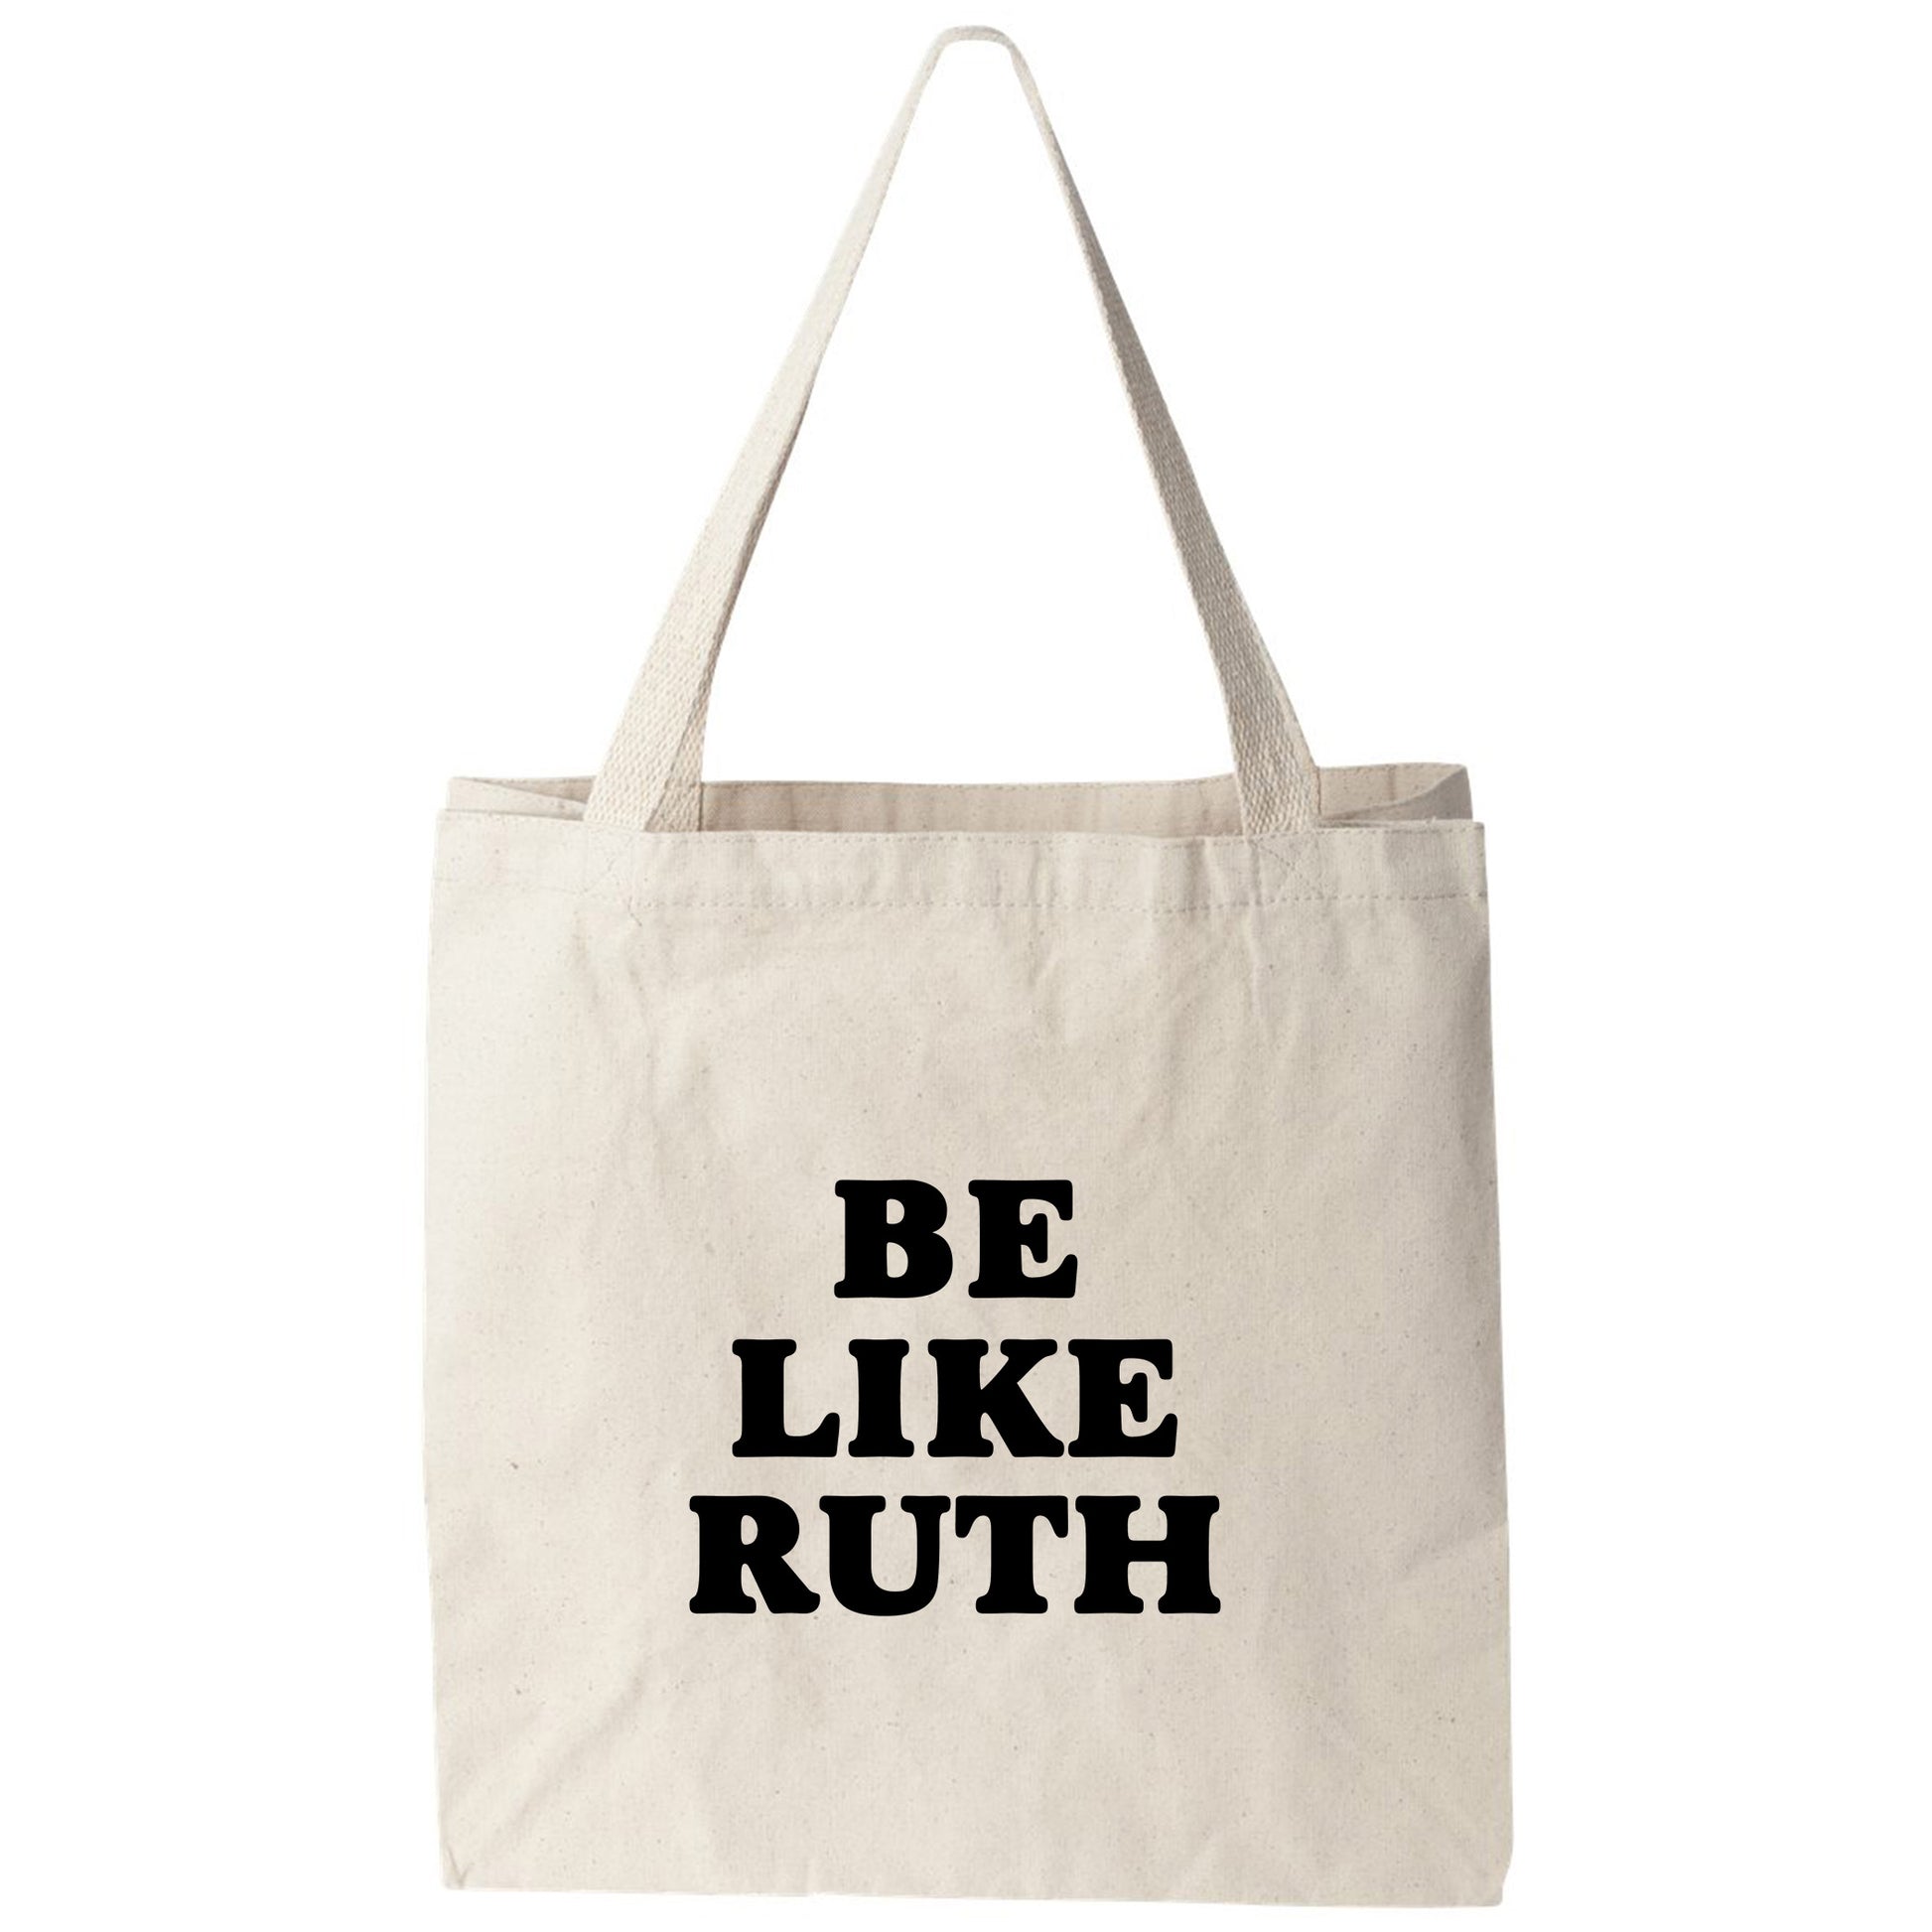 a tote bag that says be like ruth